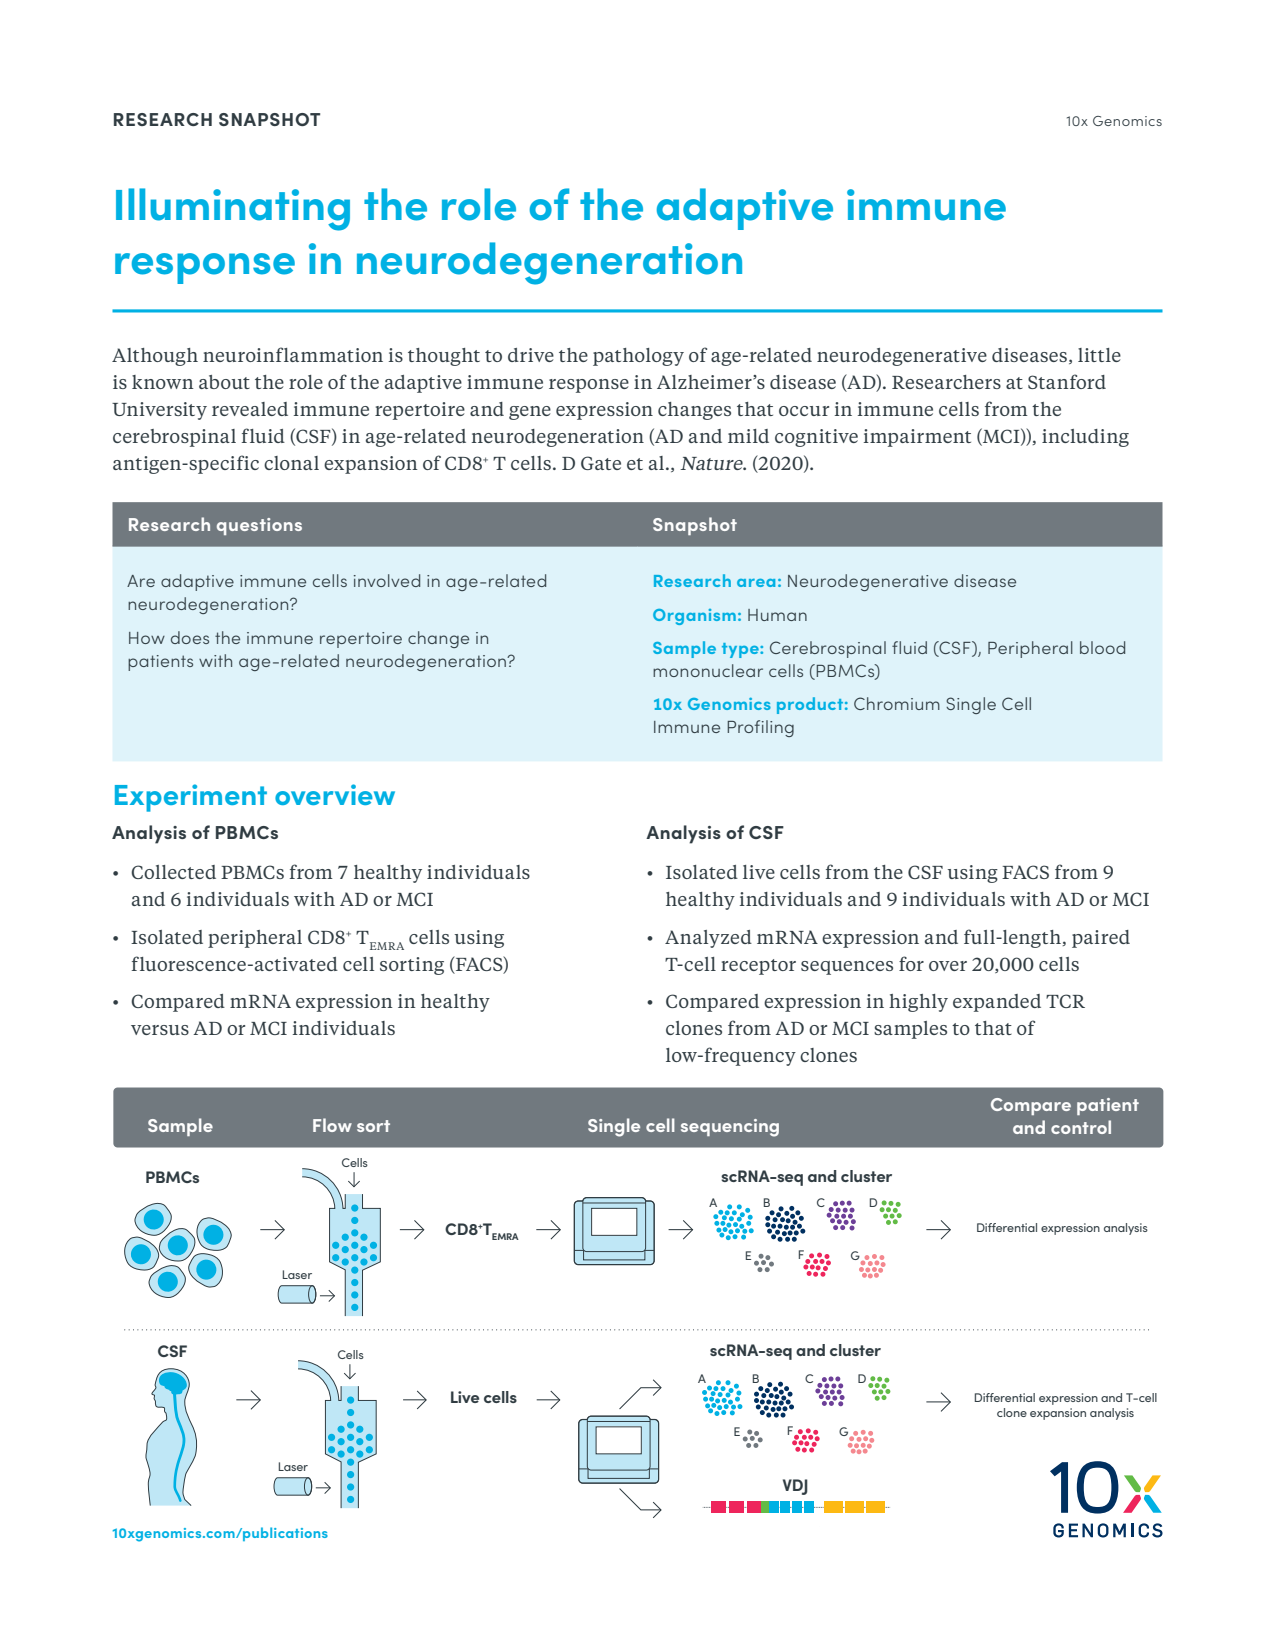 Illuminating the role of the adaptive immune response in neurodegeneration